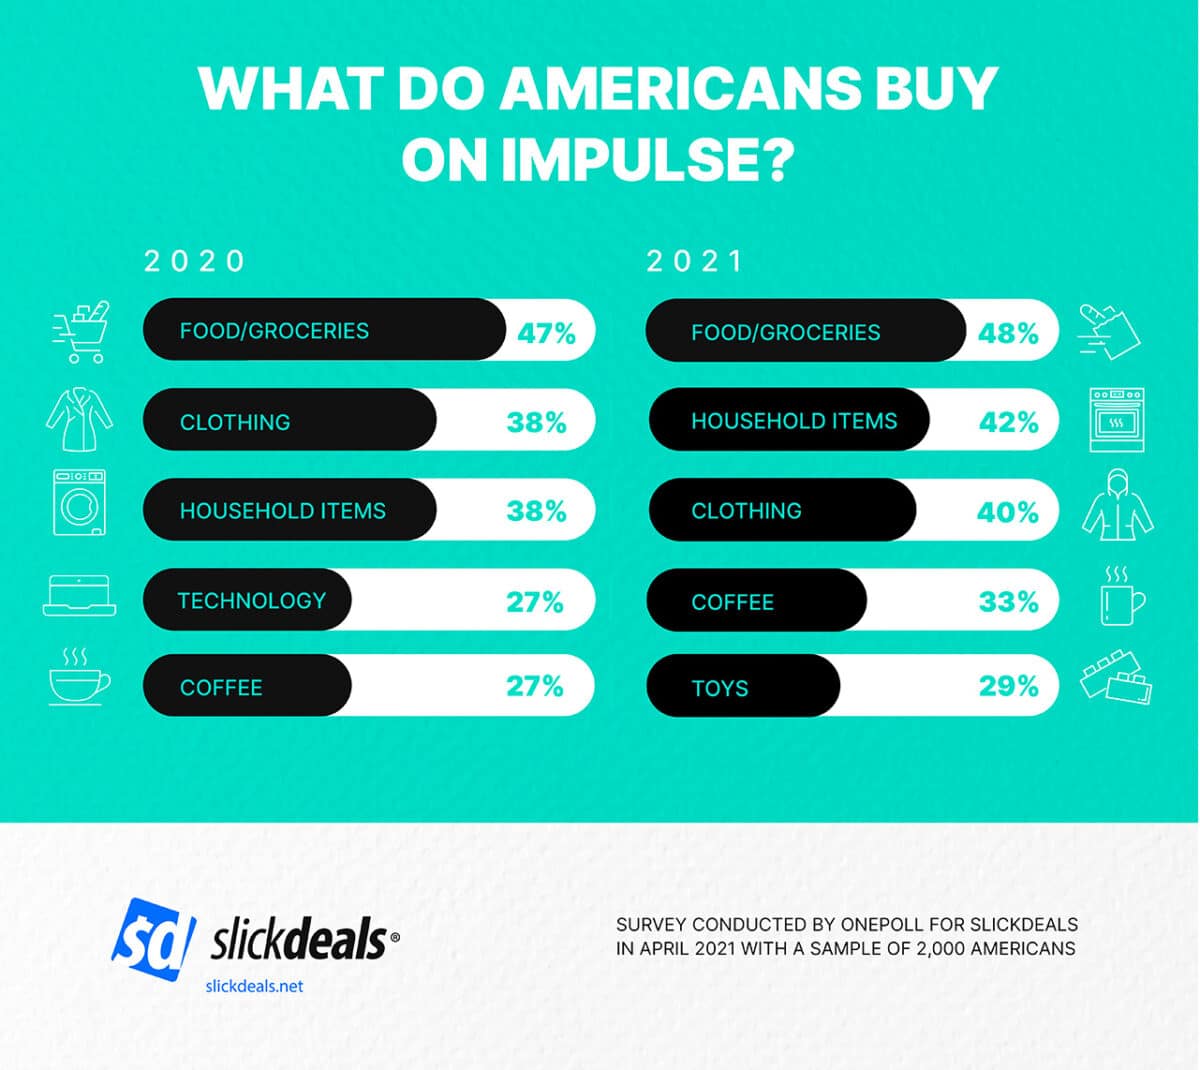 slickdeals survey american impulse buying 2021